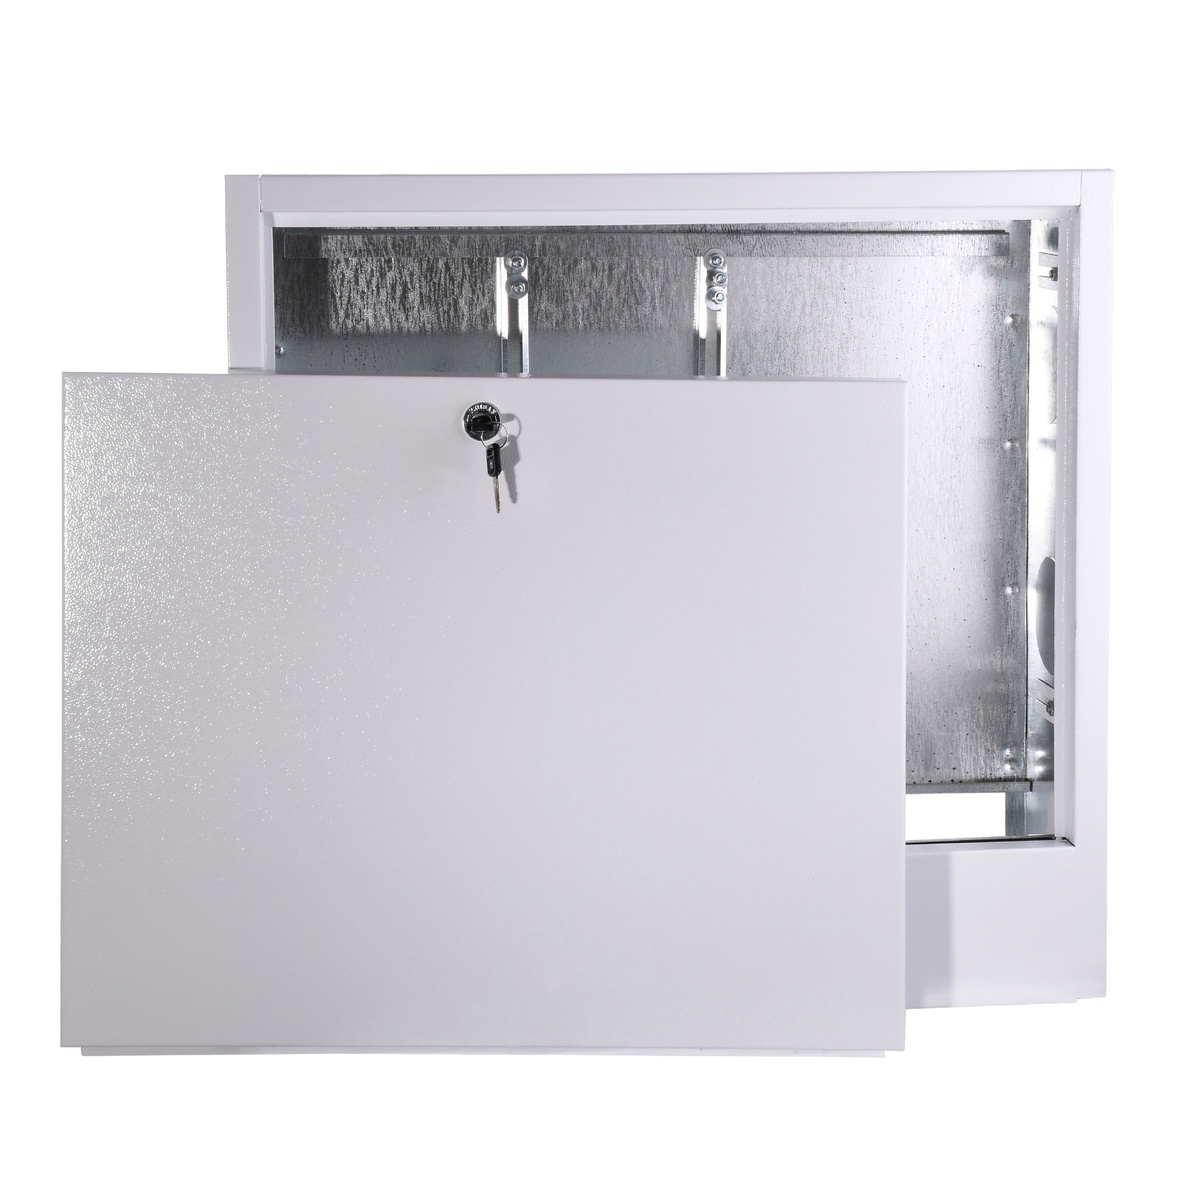 Коллекторный шкаф ECO TECHNOLOGY 570х580х110мм встраиваемый на 4 контура белый с замком ШКВ-02 000012549